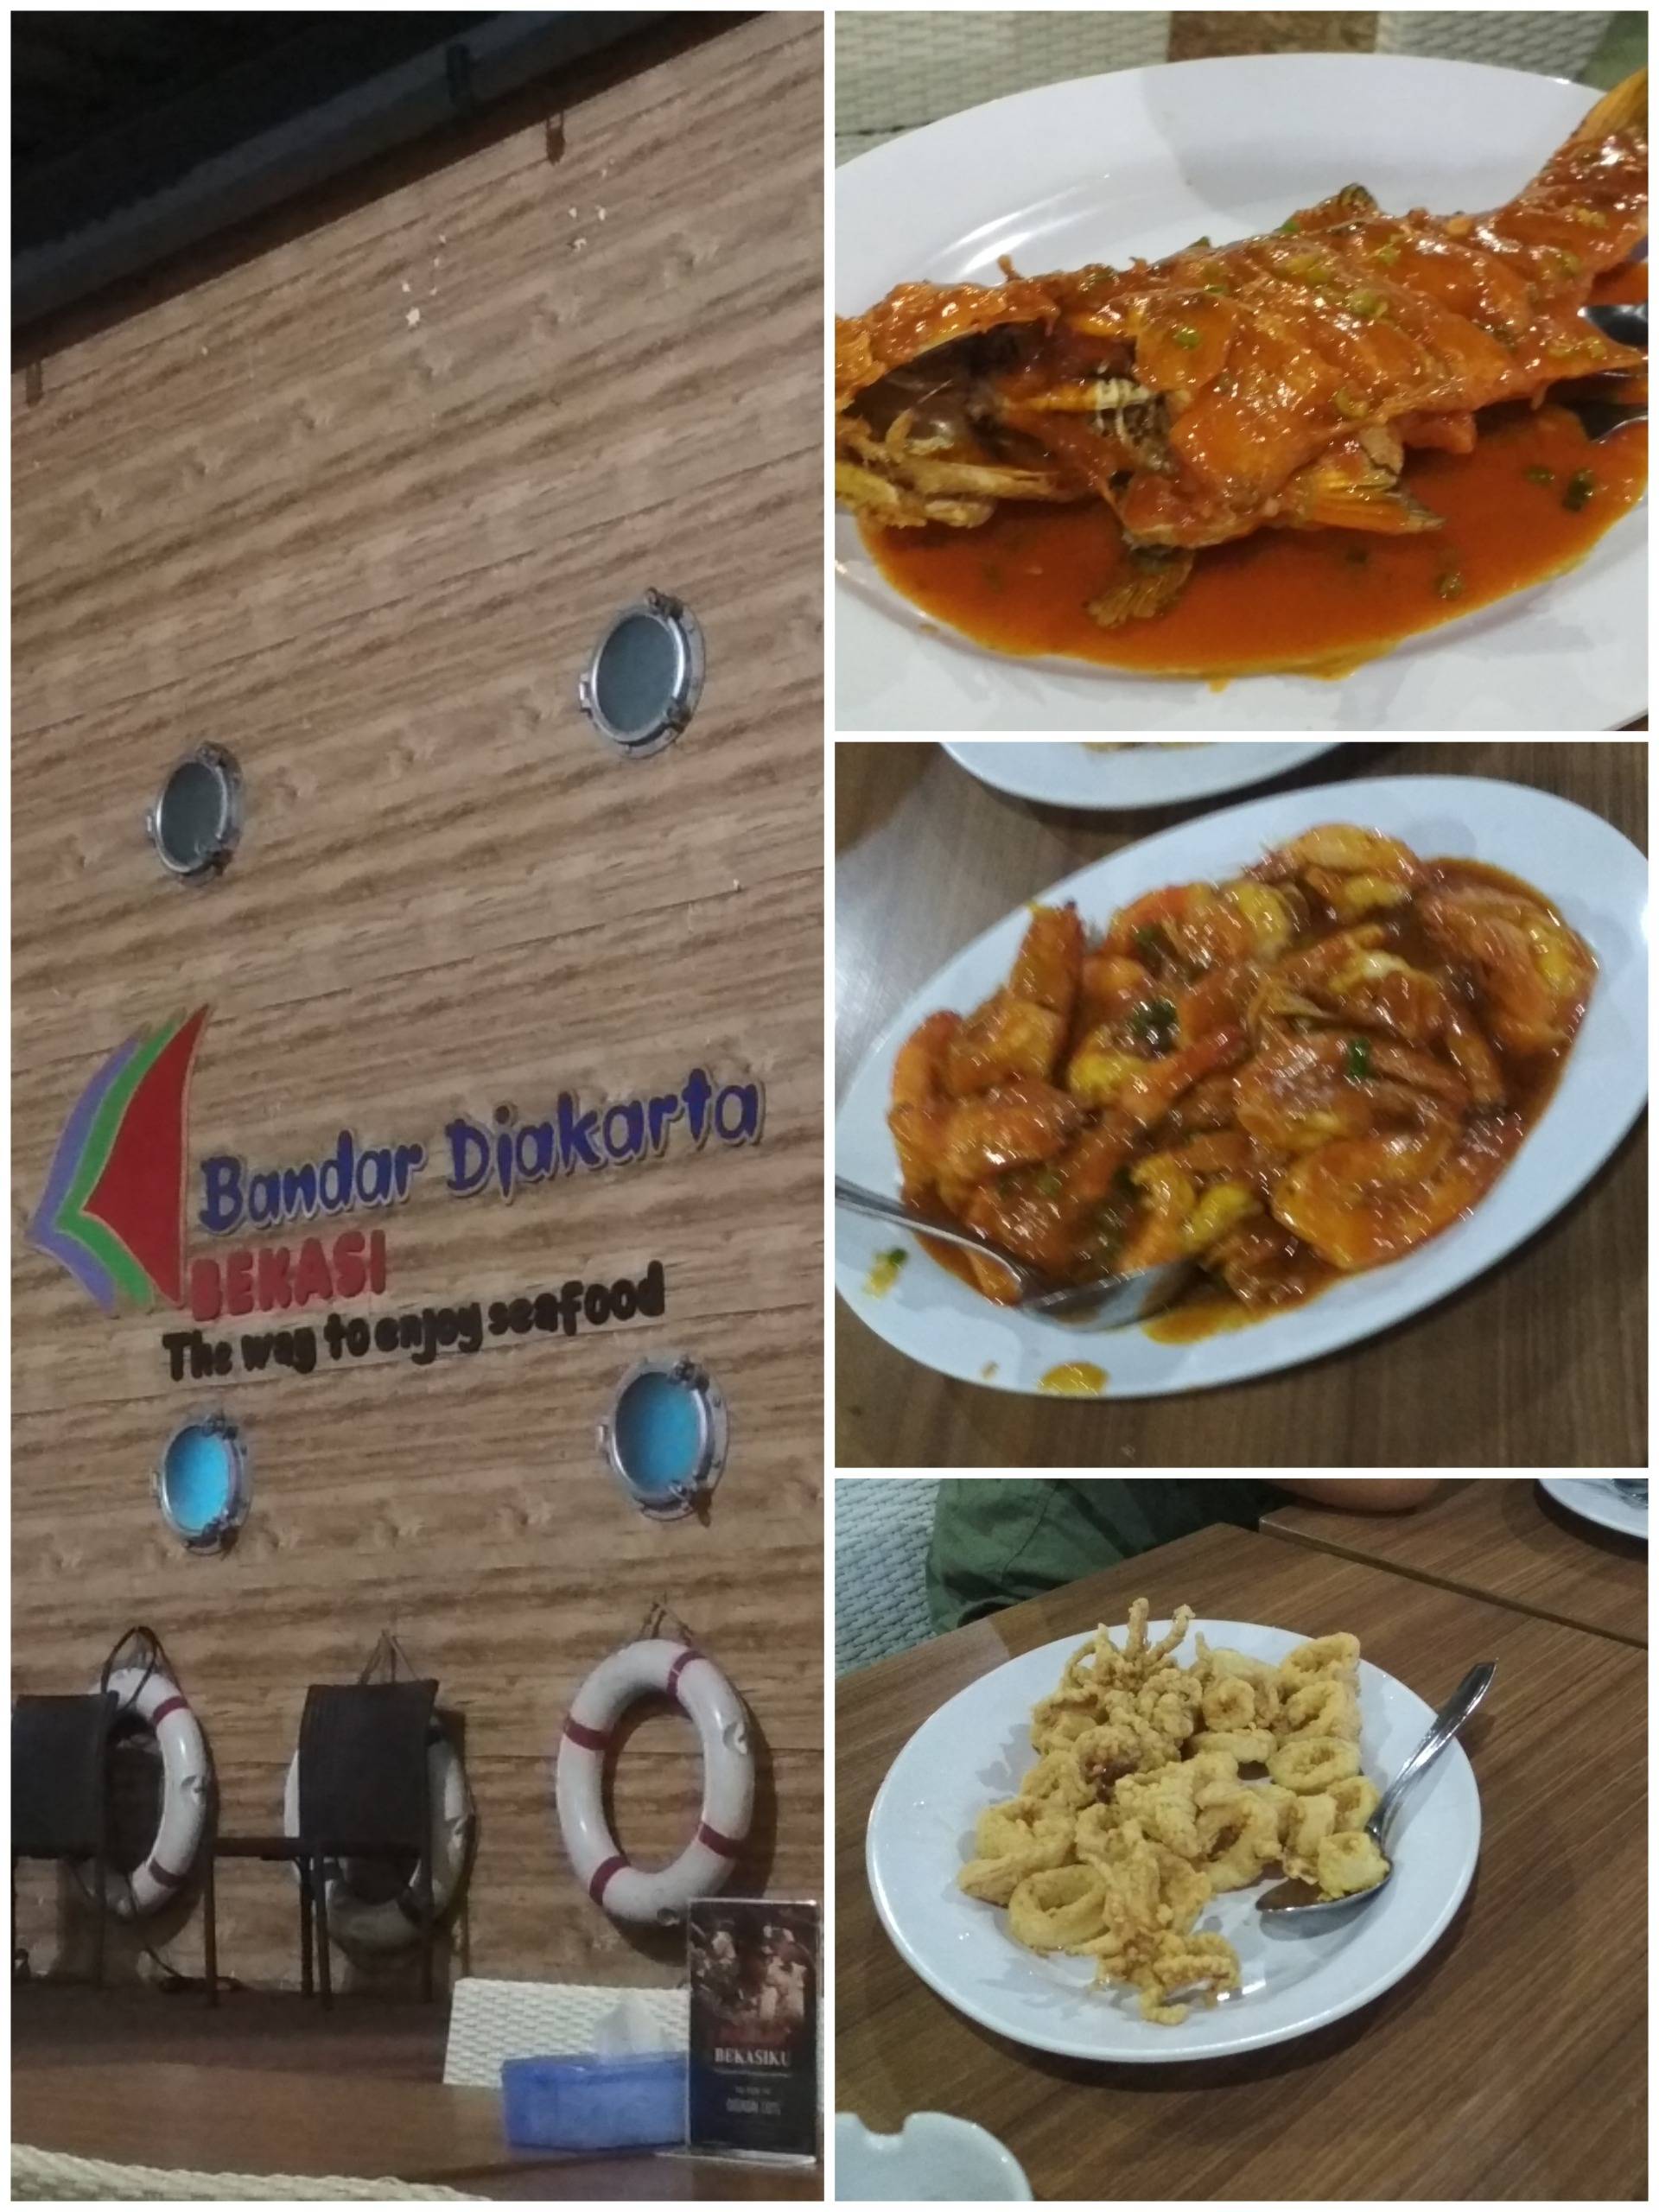 BANDAR DJAKARTA seafood restaurant is special